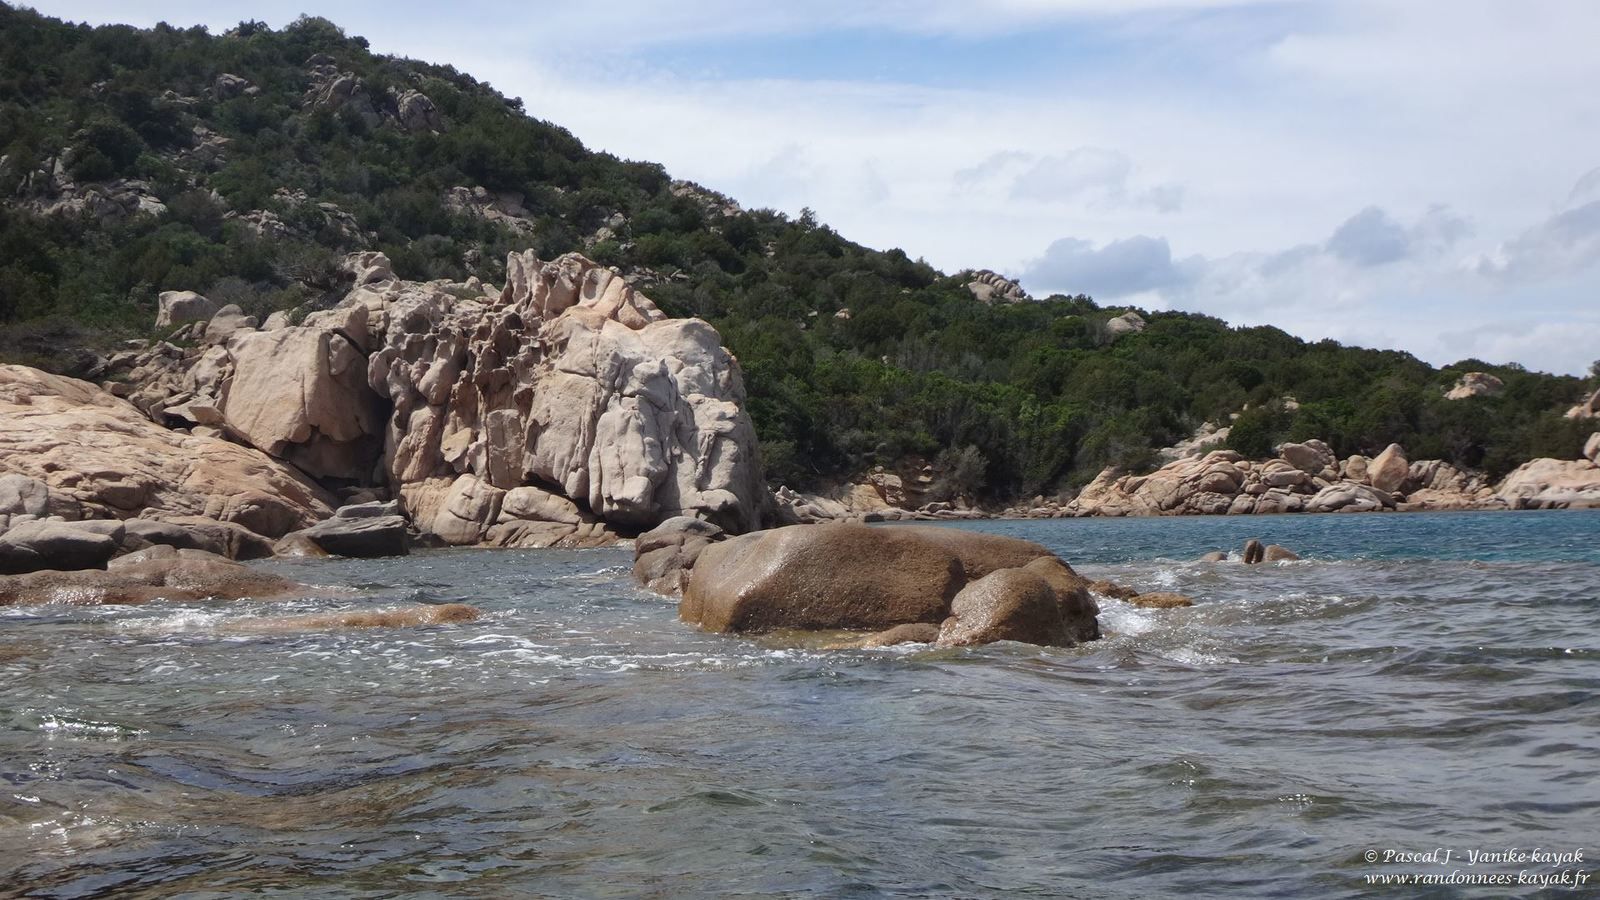 Sardegna 2019, una nuova avventura - Chapitre 7 - de Calacavallo, vers Punta Molara, un nouveau terrain de jeu